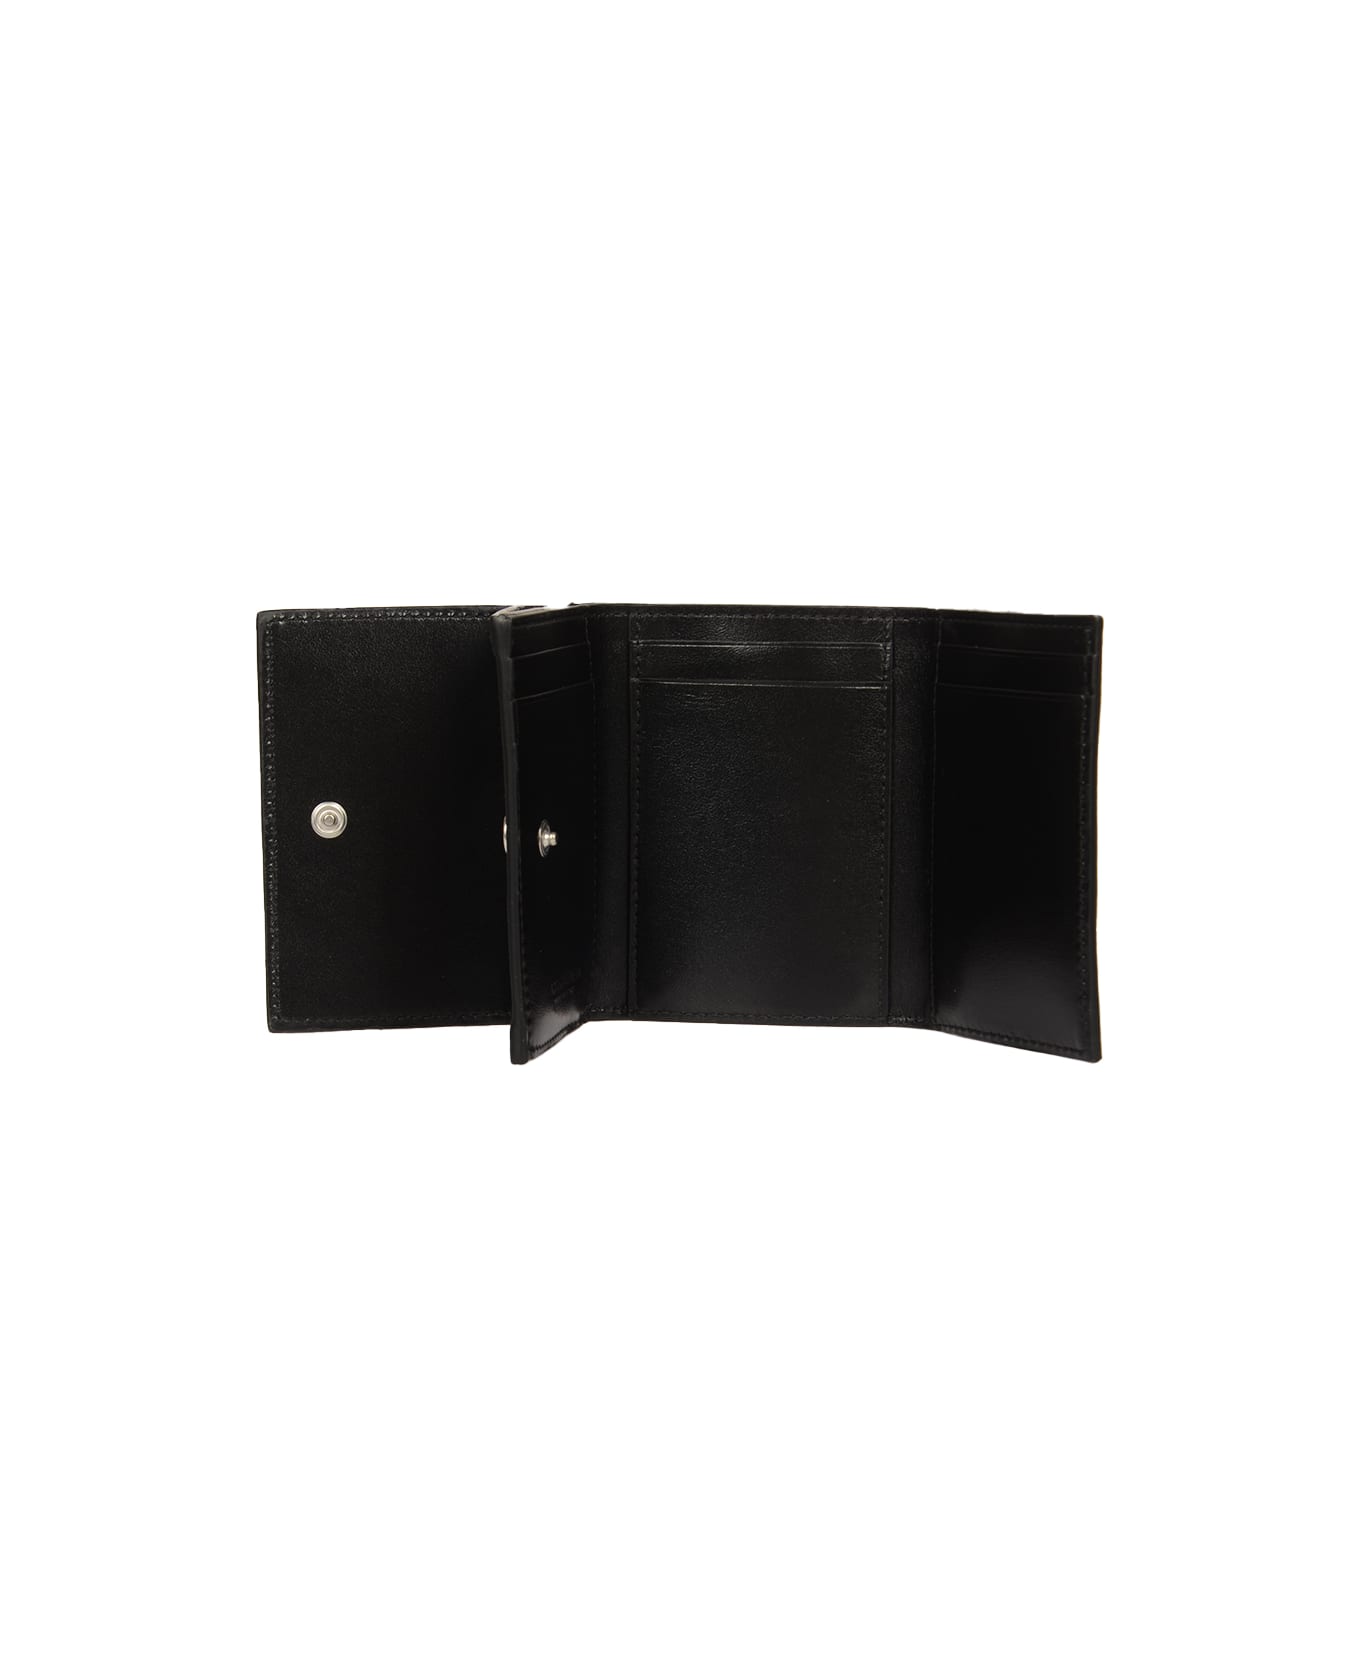 Bottega Veneta Weave Trifold Wallet - Black/Silver 財布